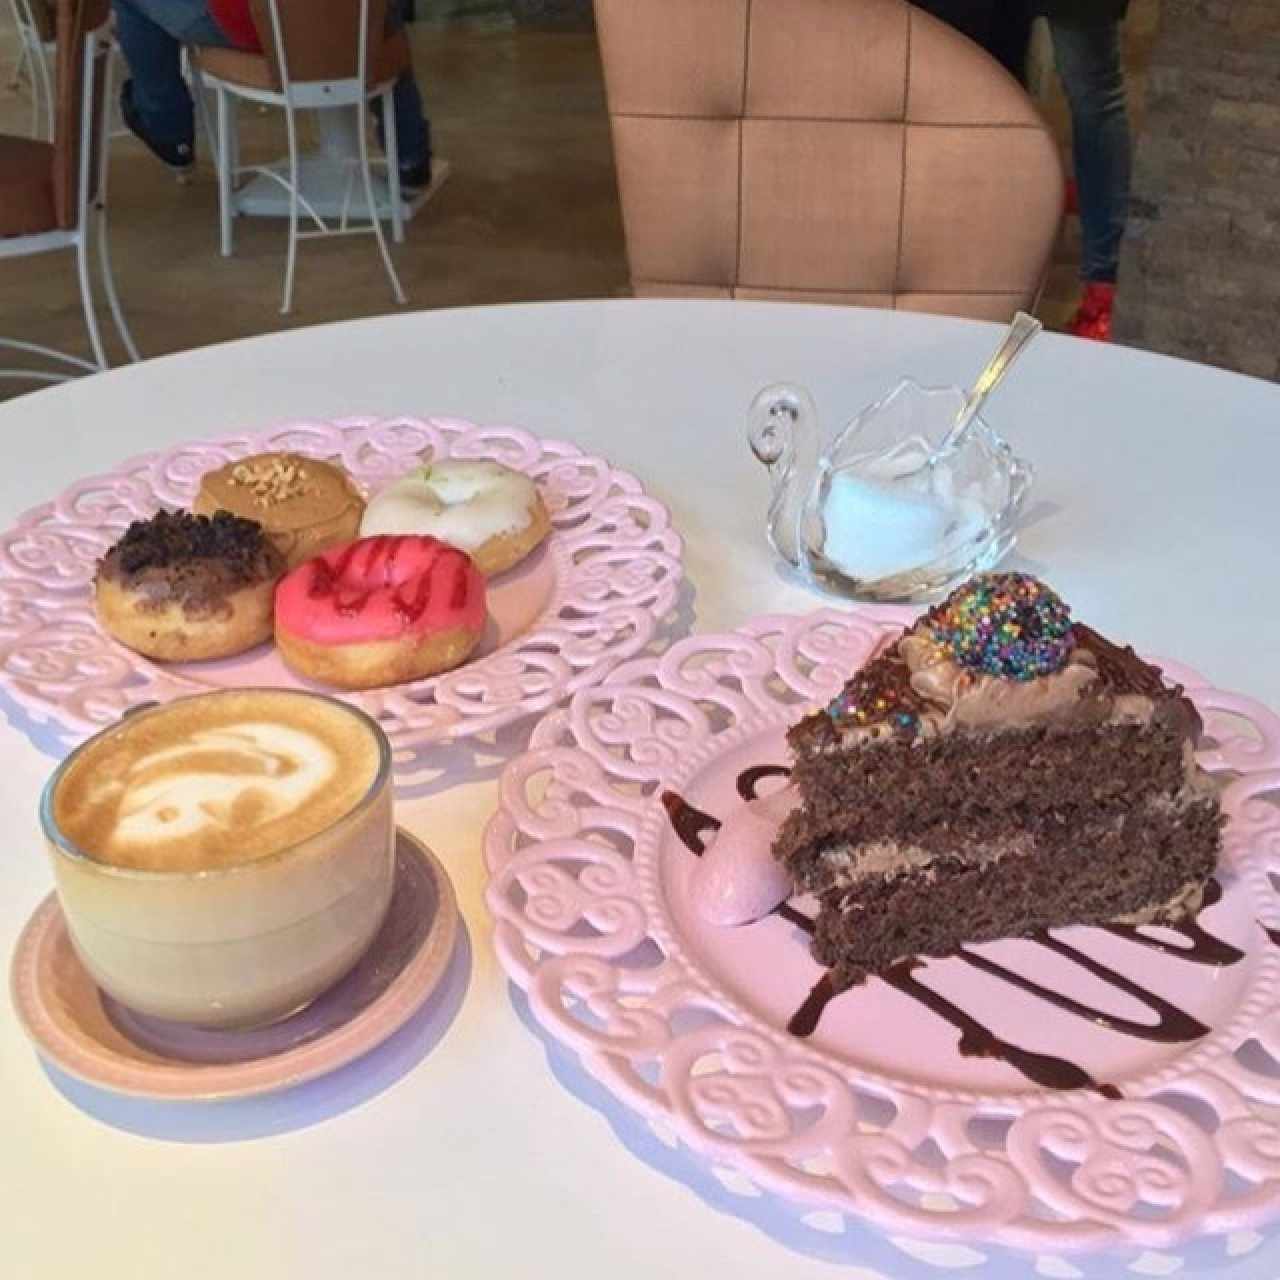 Promo de mini donas, Cafe con leche y Torta de chocolate.